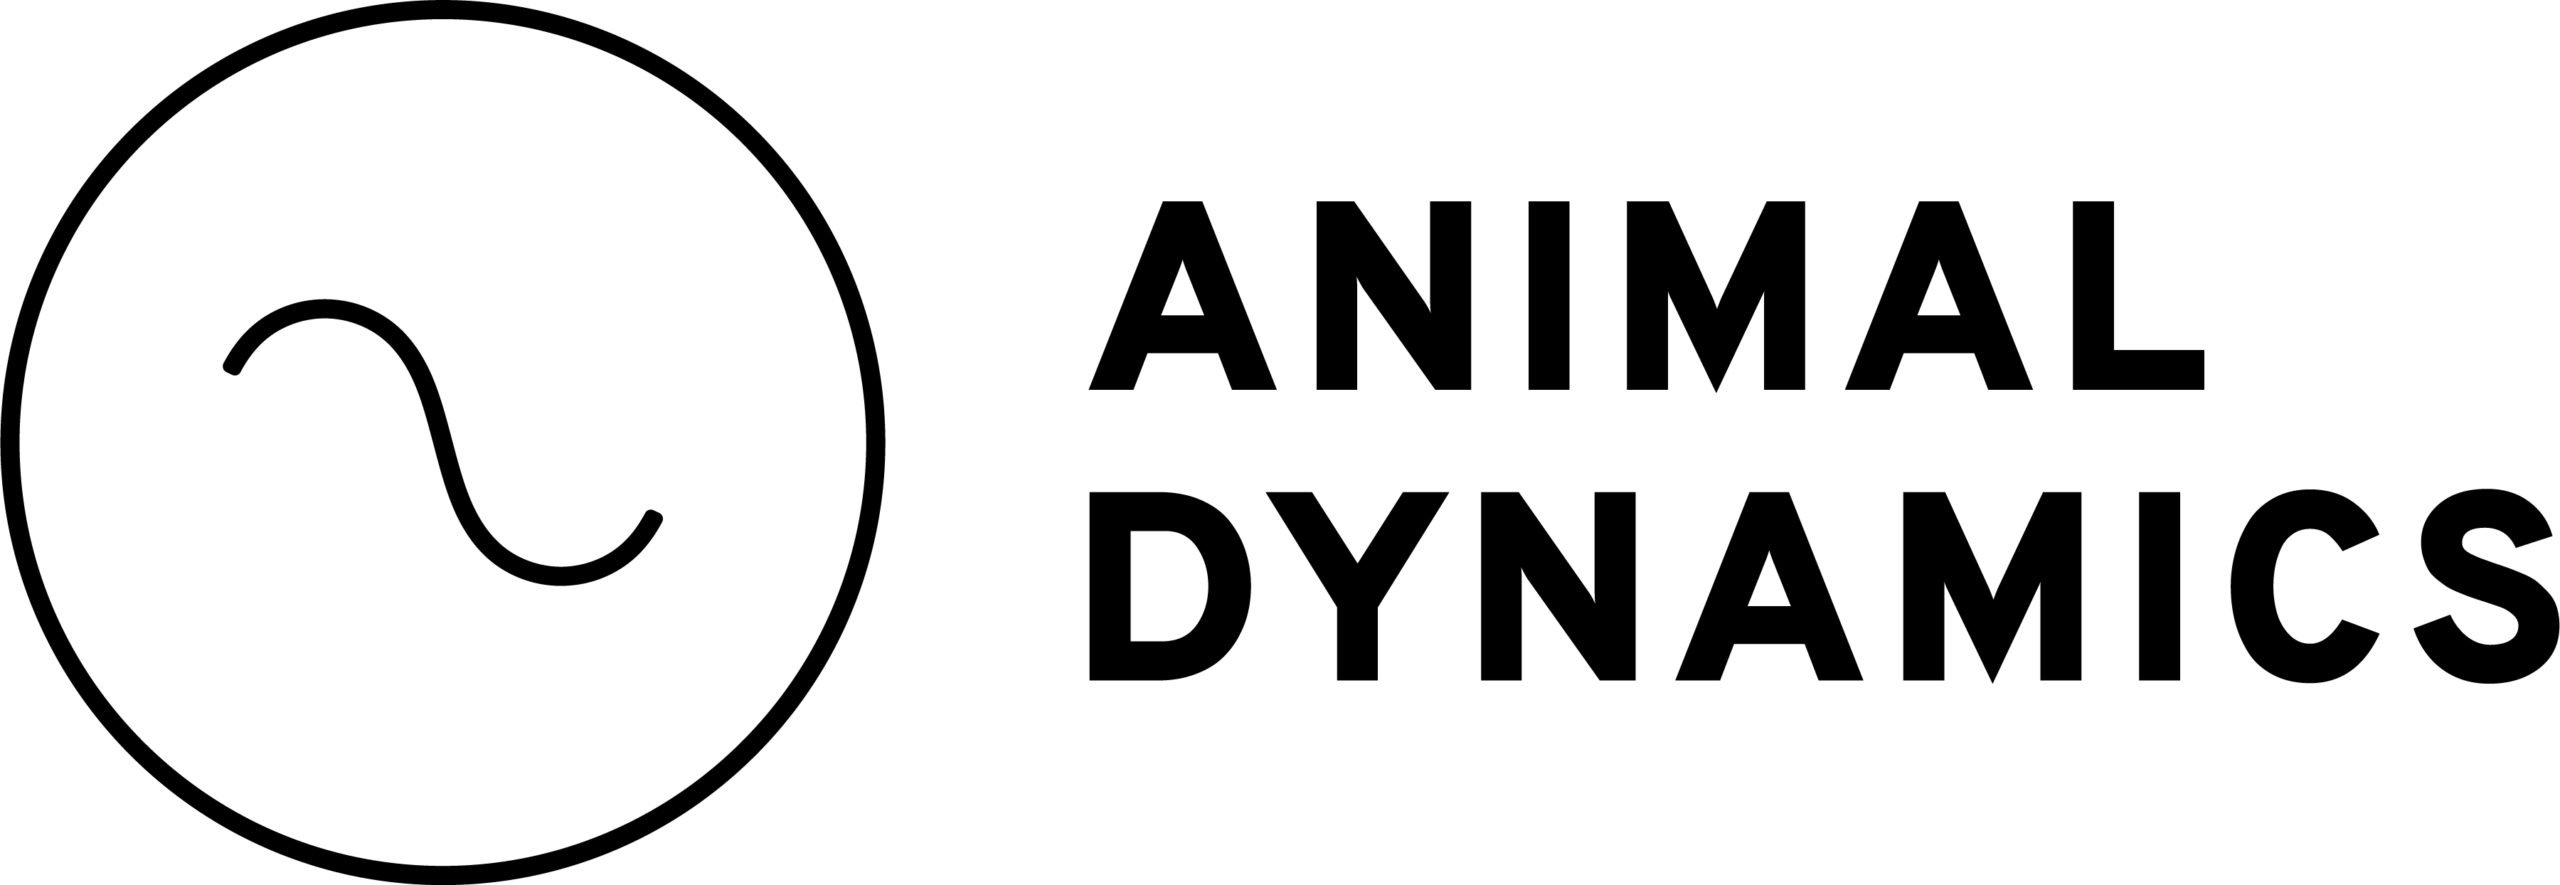 Animal Dynamics logo